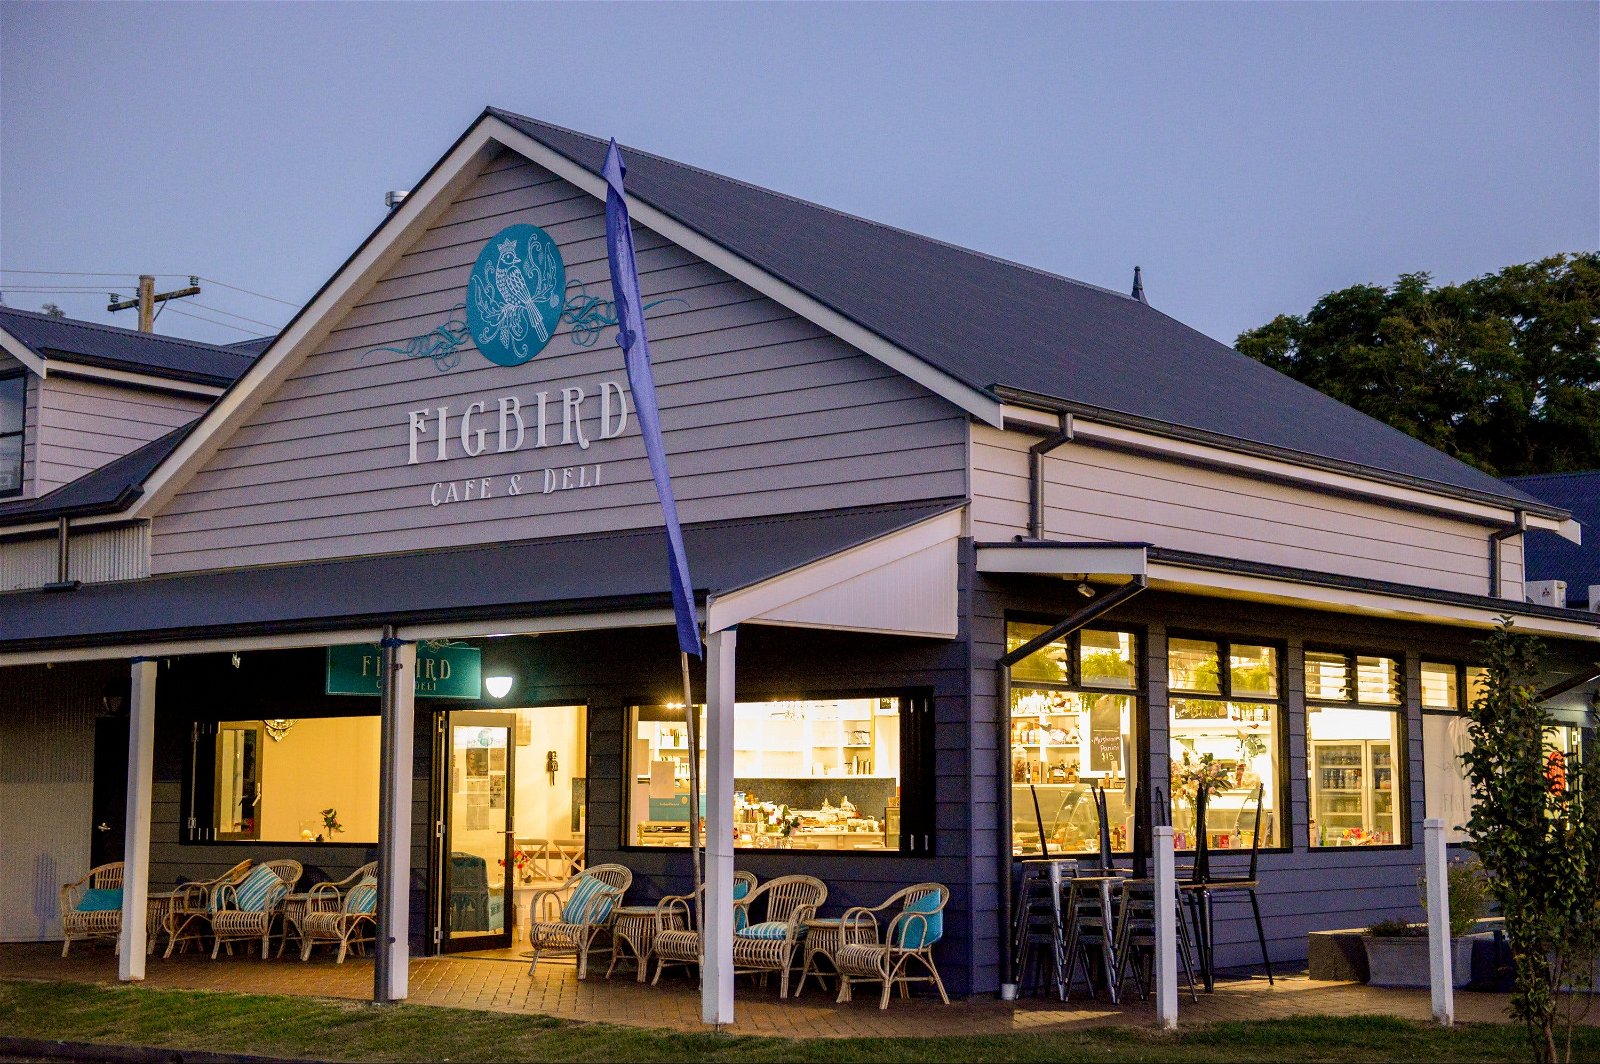 Figbird Cafe and Deli - Tourism TAS